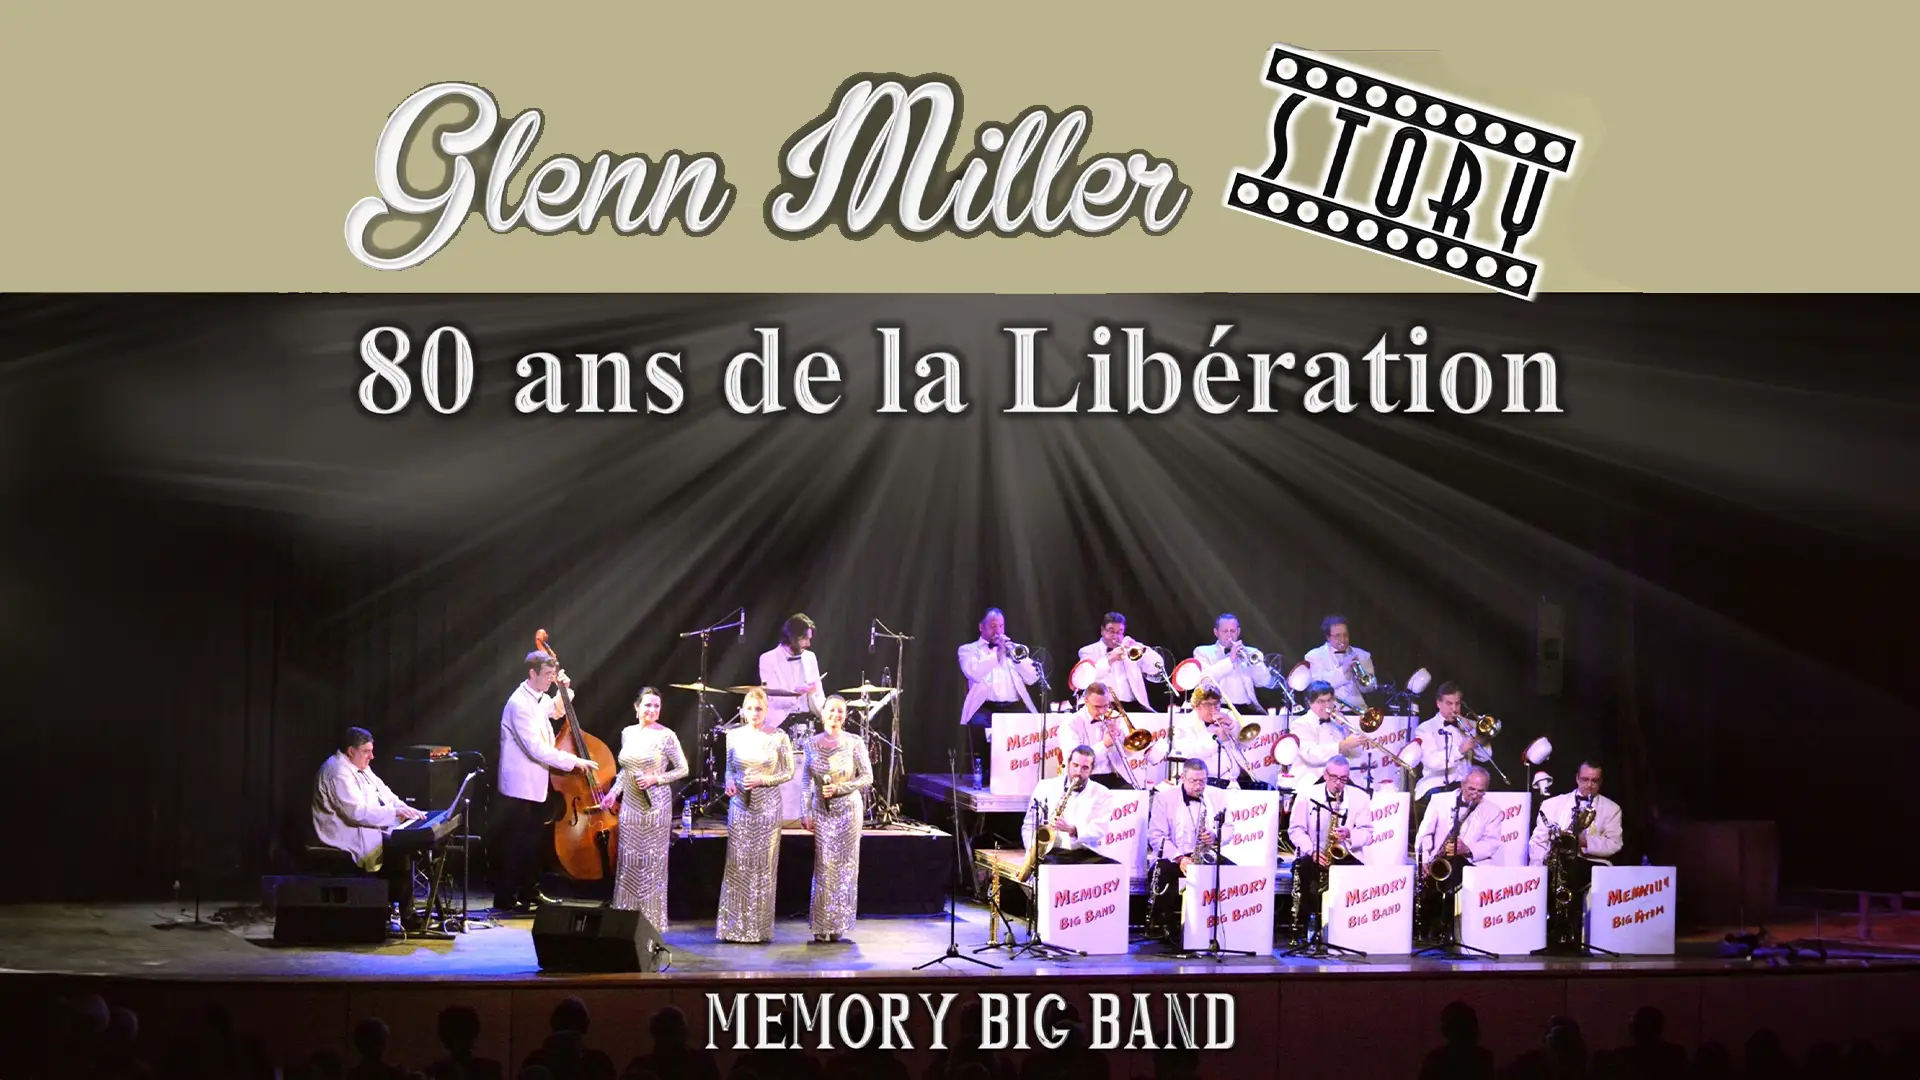 Claude gerard production présente Memory Big Band